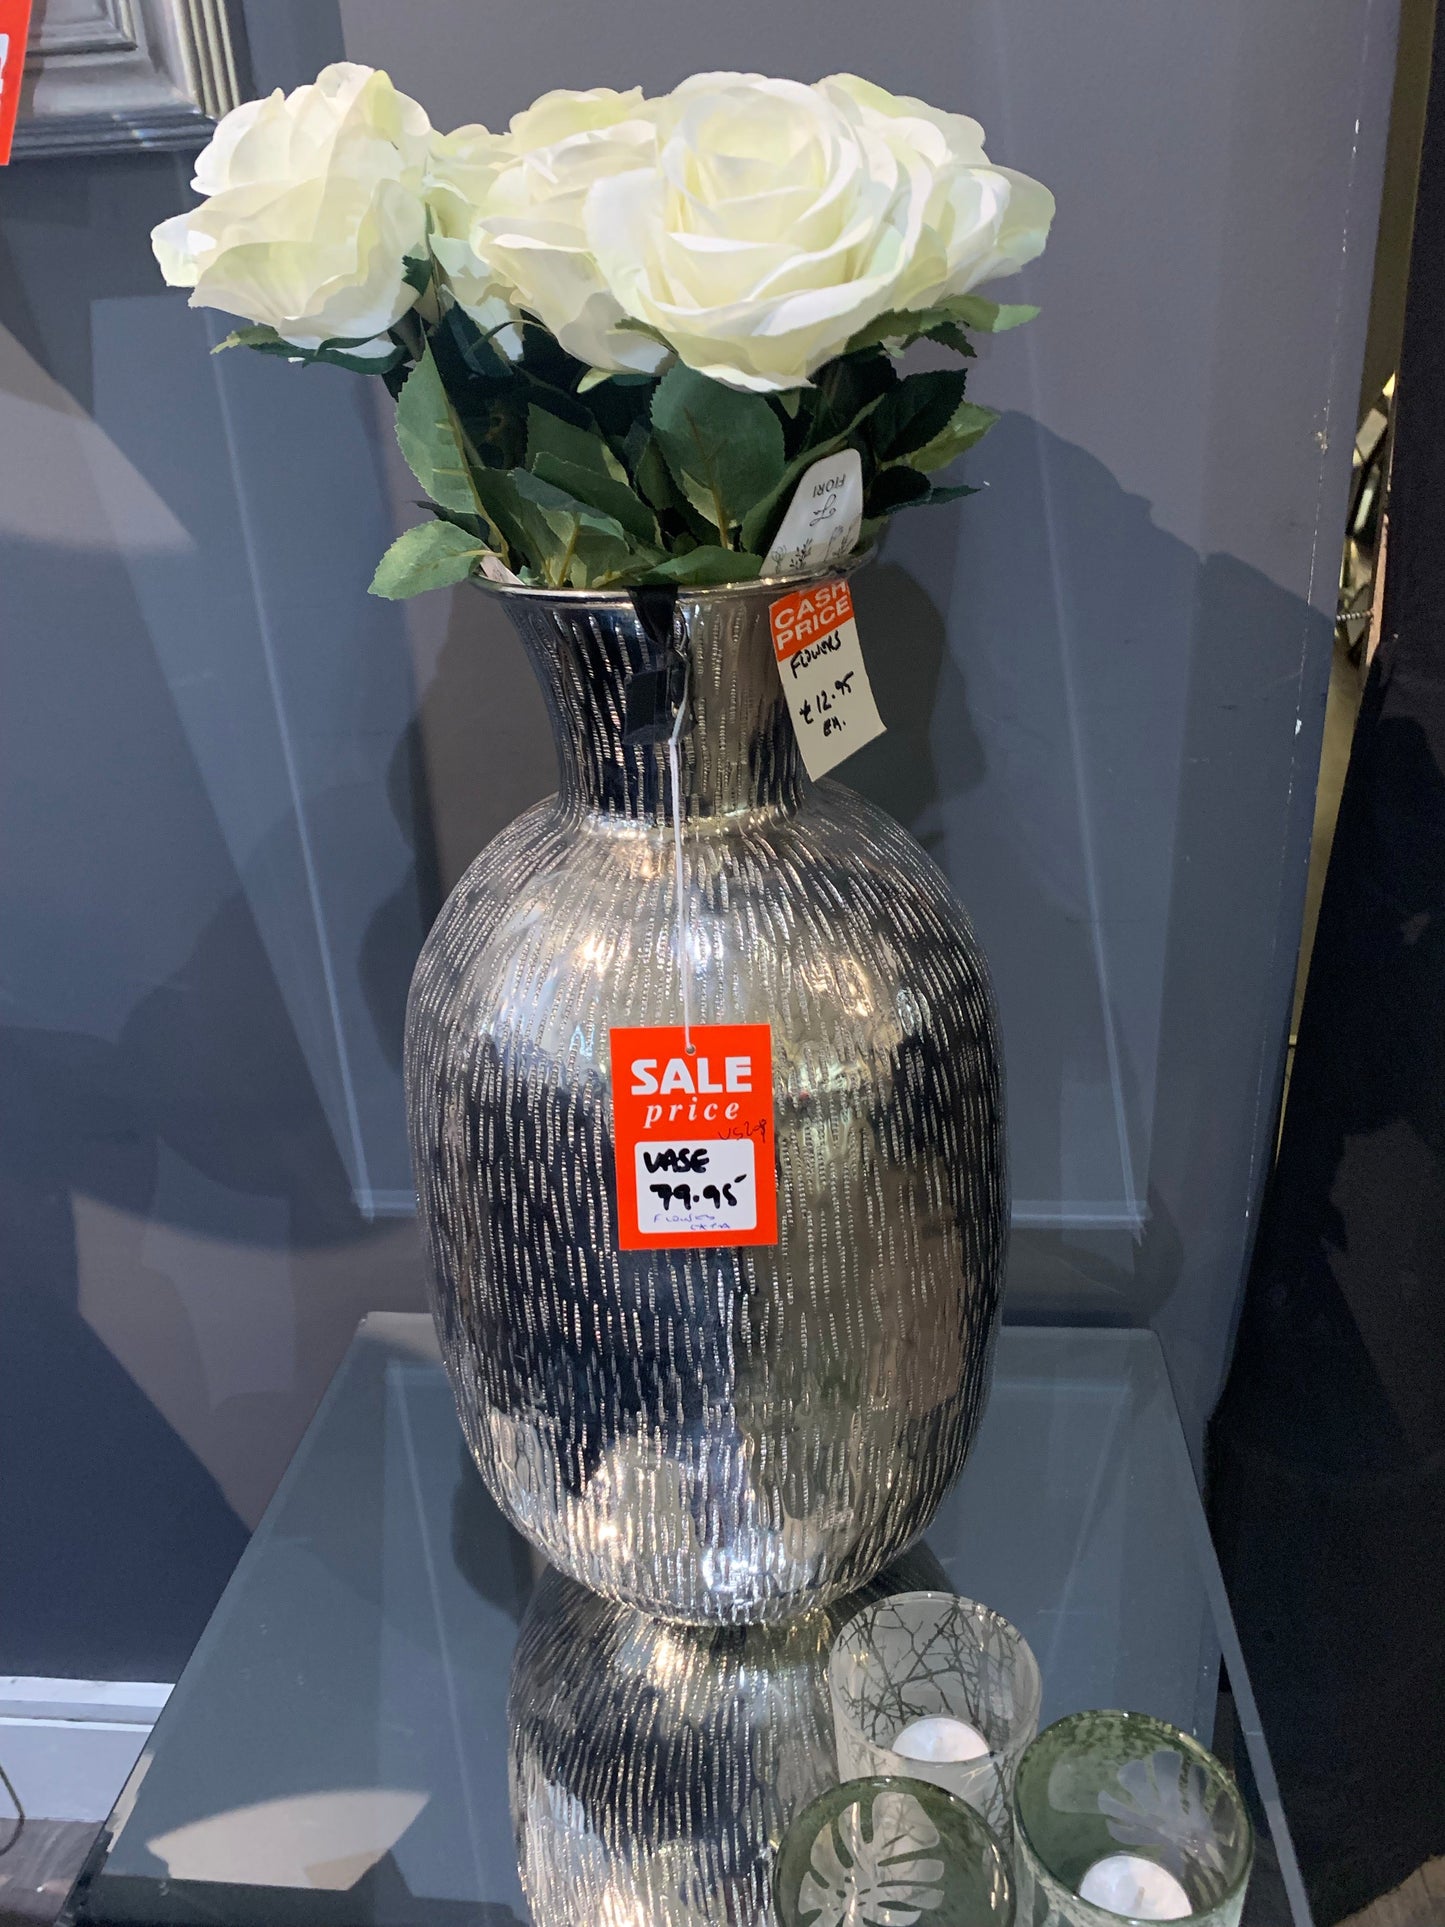 Chanel Nickel large vase reduced instore